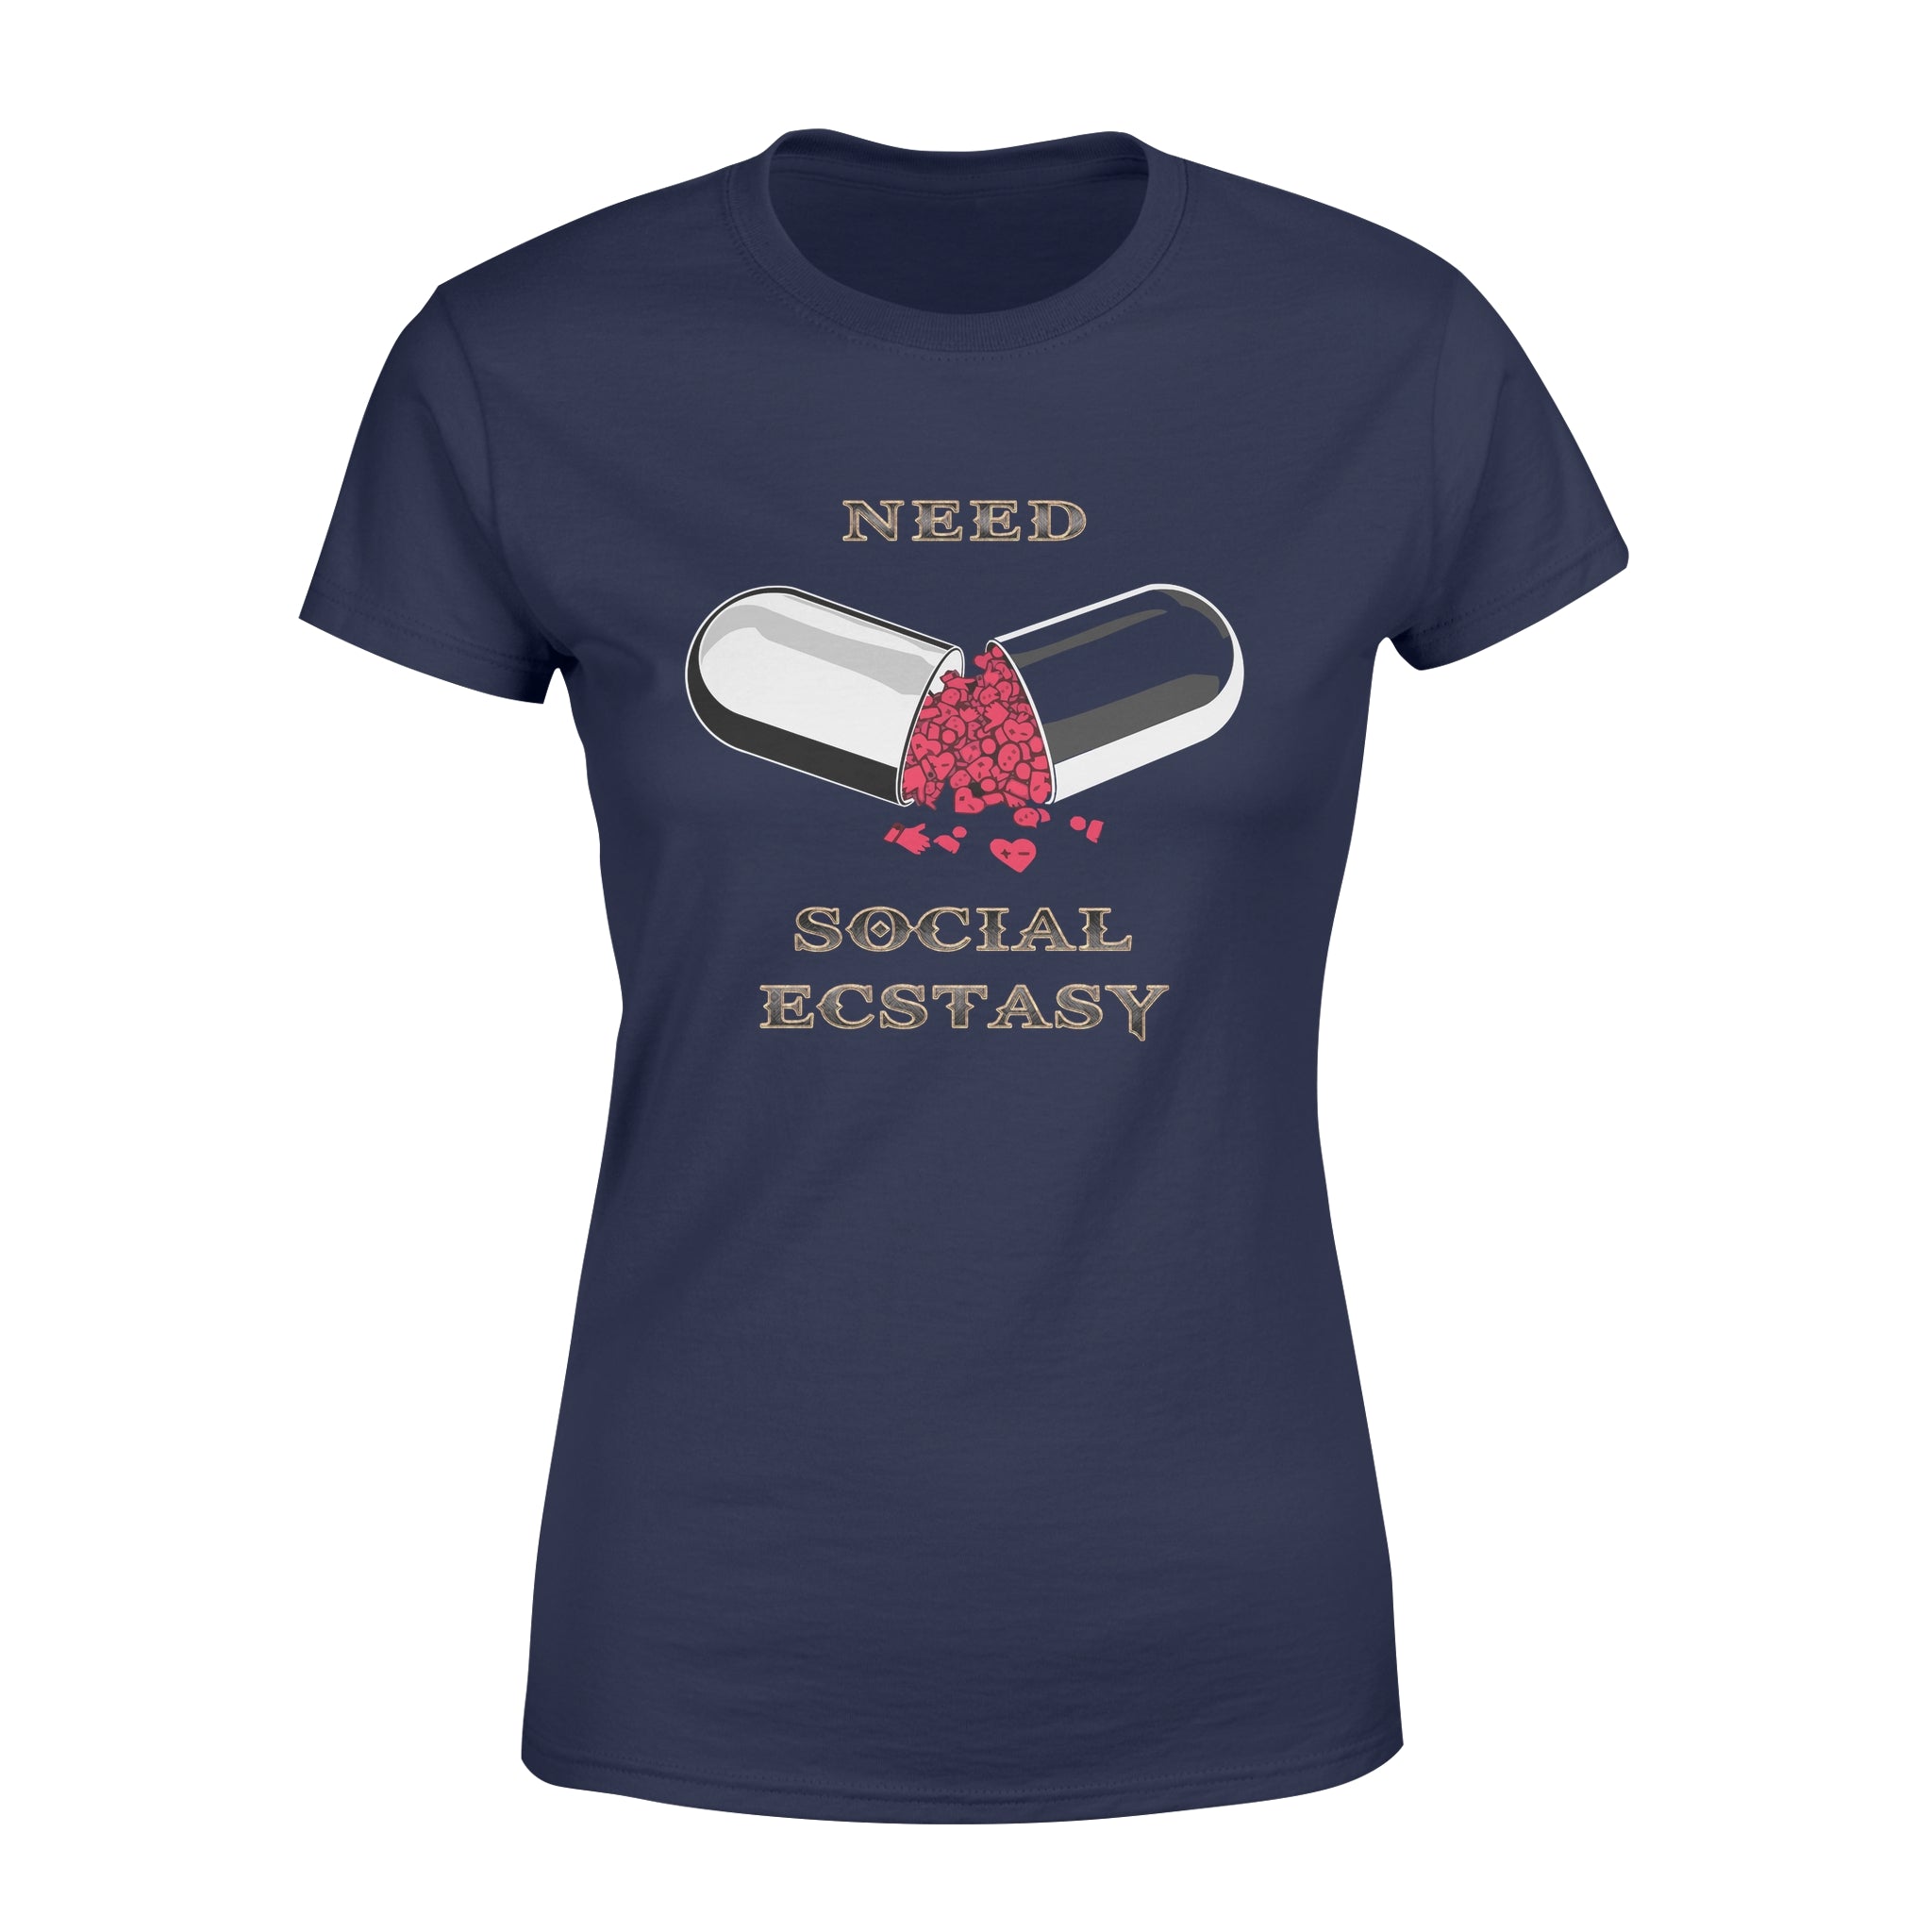 Social Ecstasy - Women's T-shirt